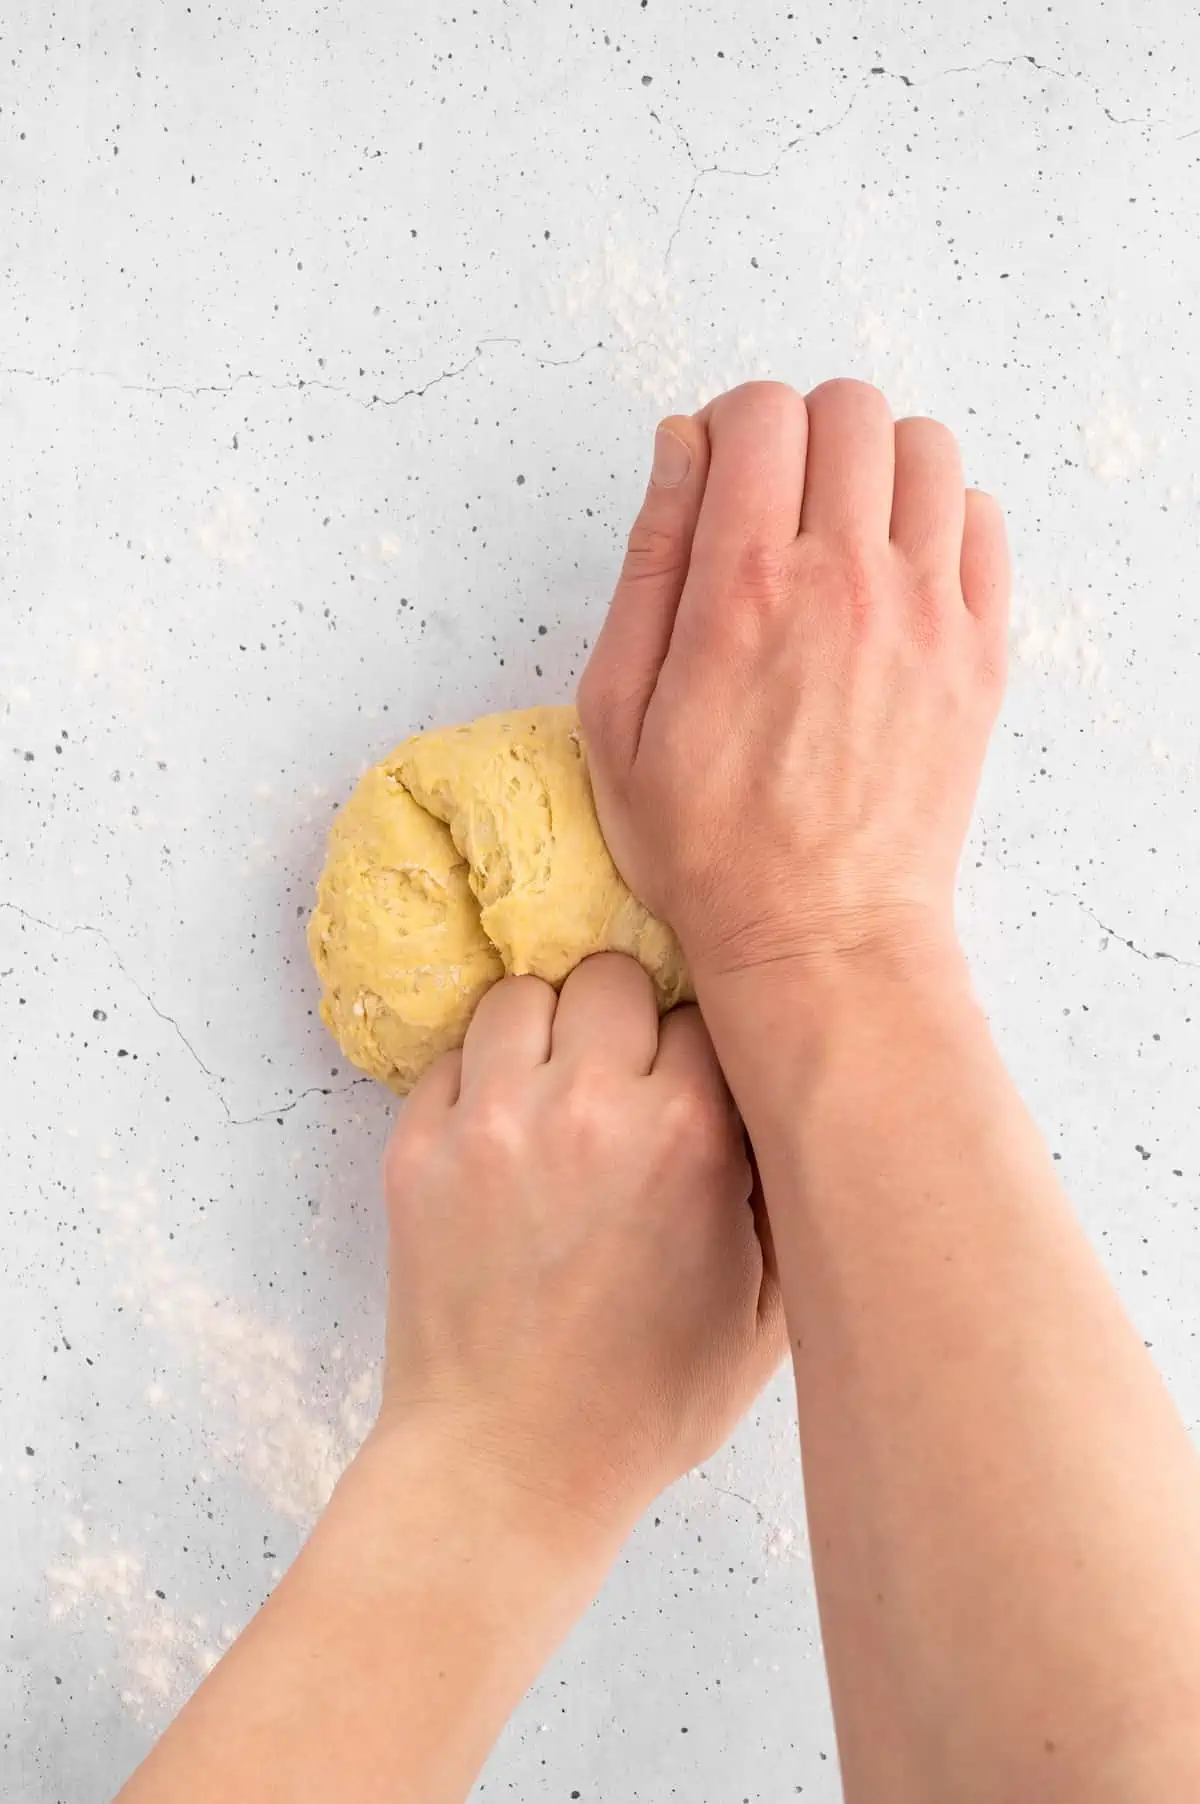 Hands kneading ravioli dough.